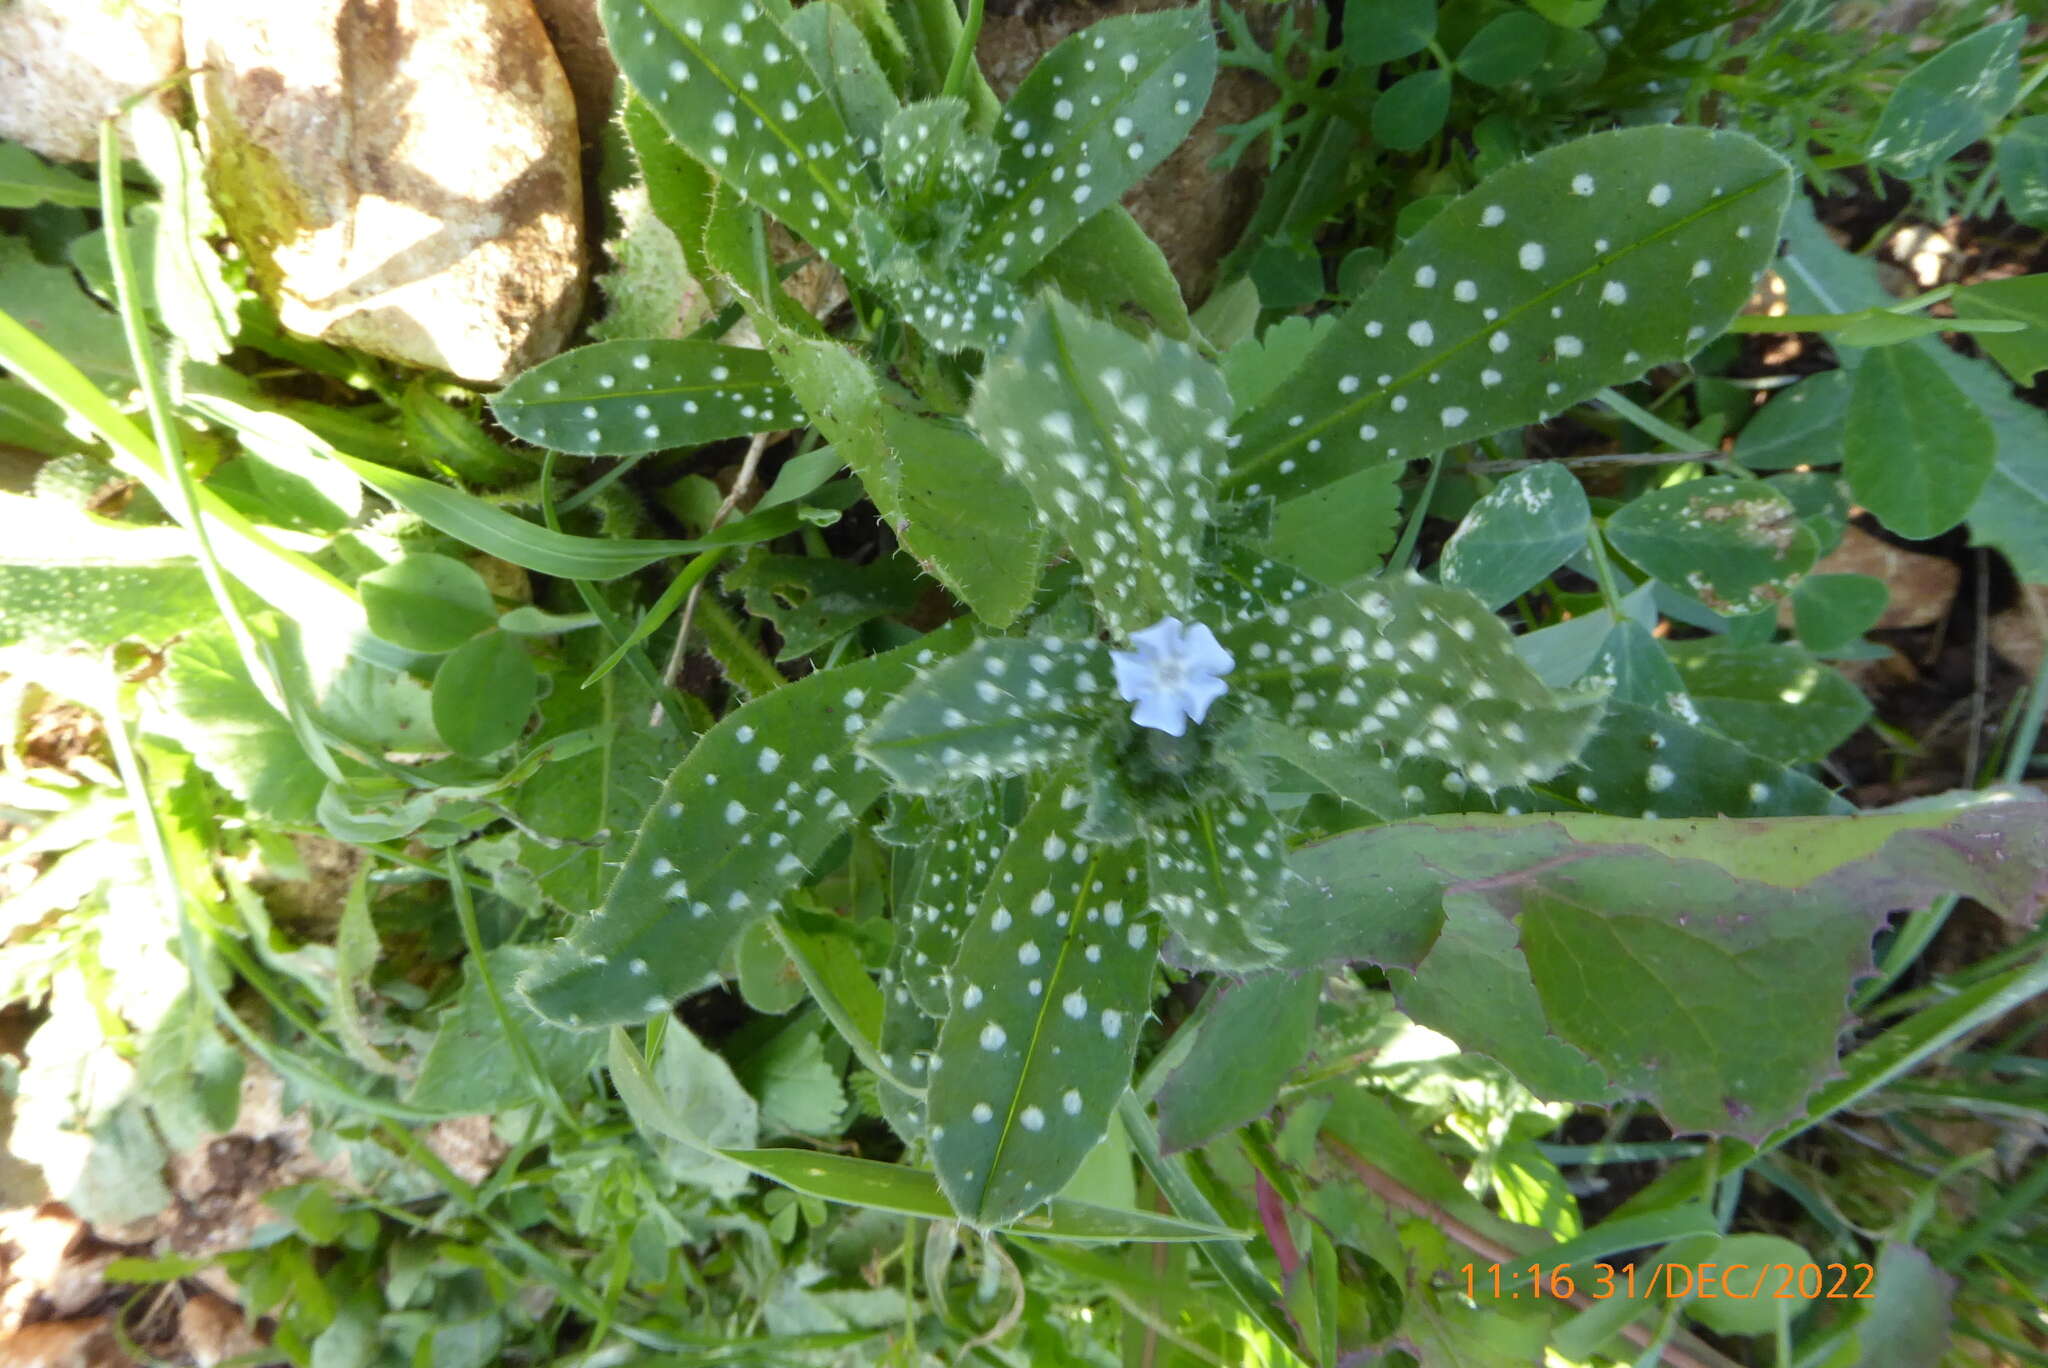 Image of Melanortocarya obtusifolia (Willd.) Selvi, Bigazzi, Hilger & Papini